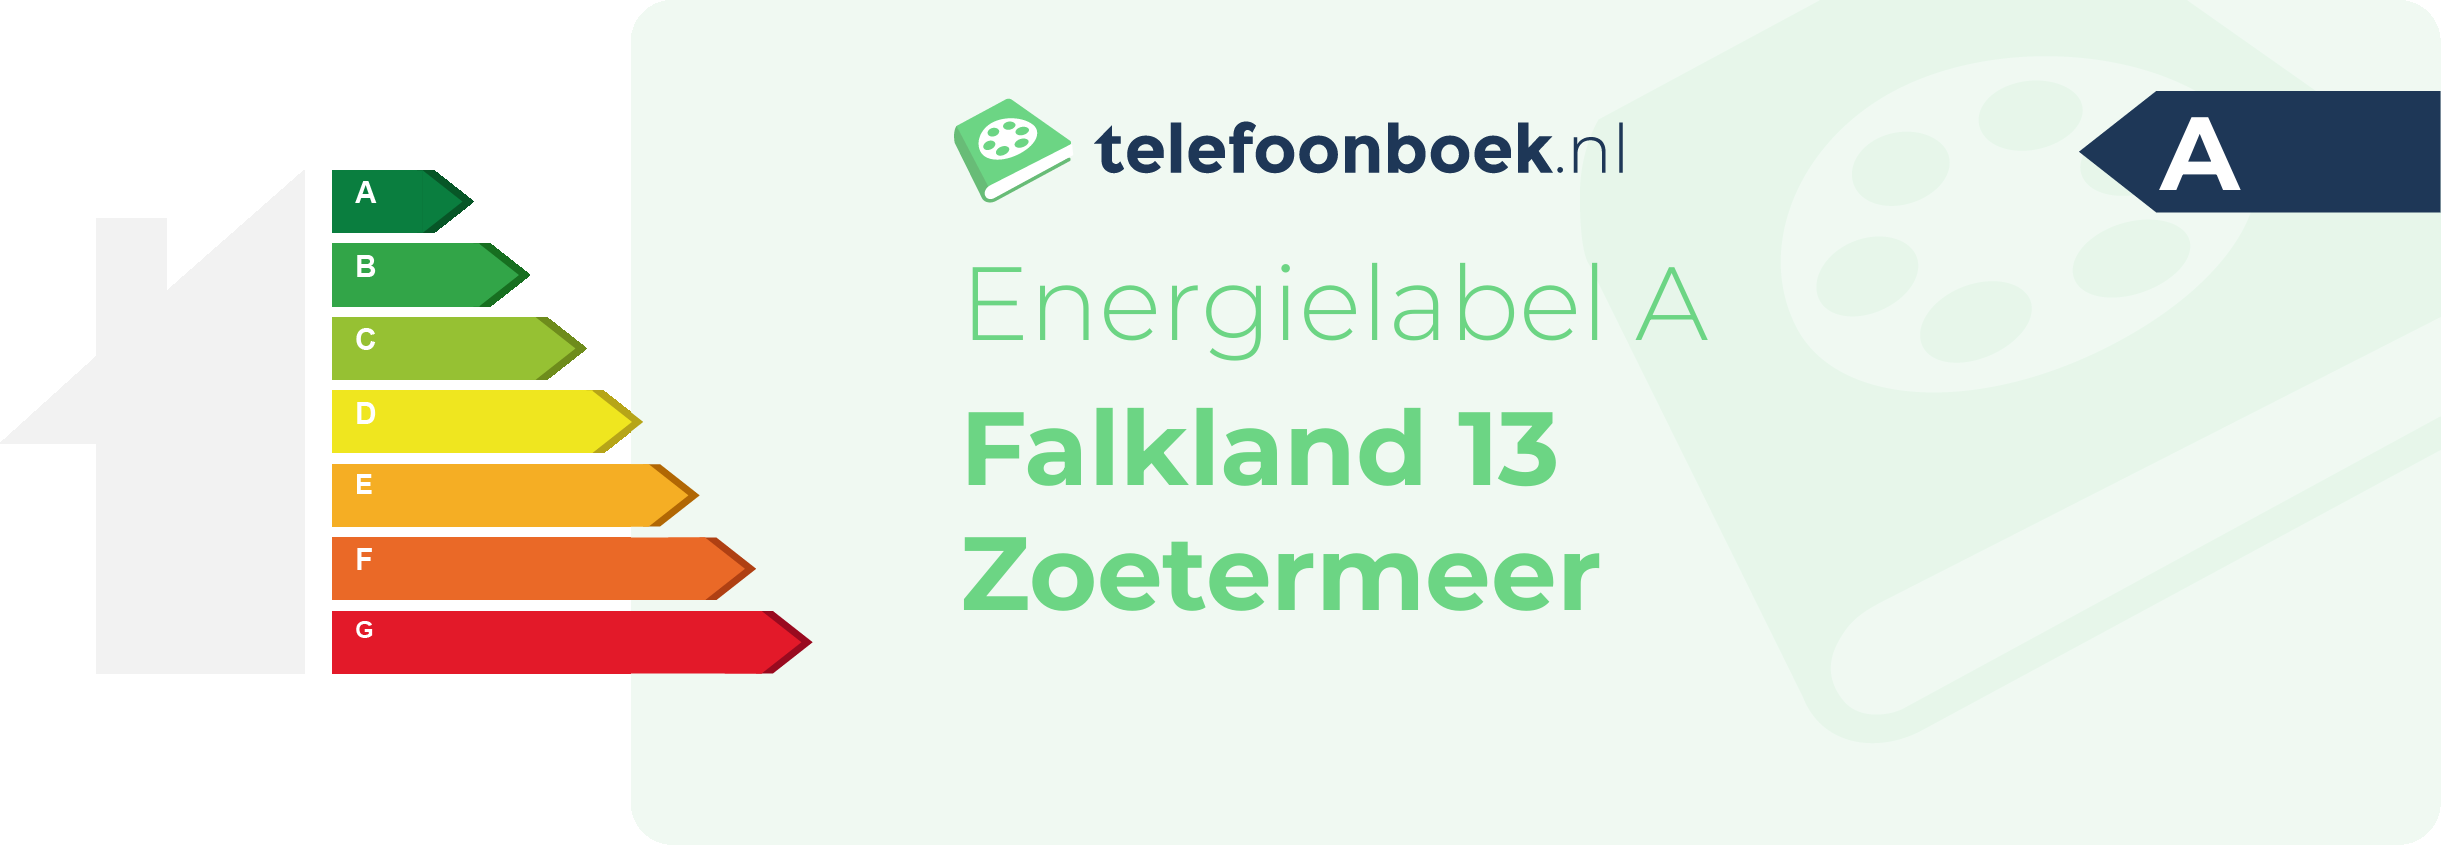 Energielabel Falkland 13 Zoetermeer